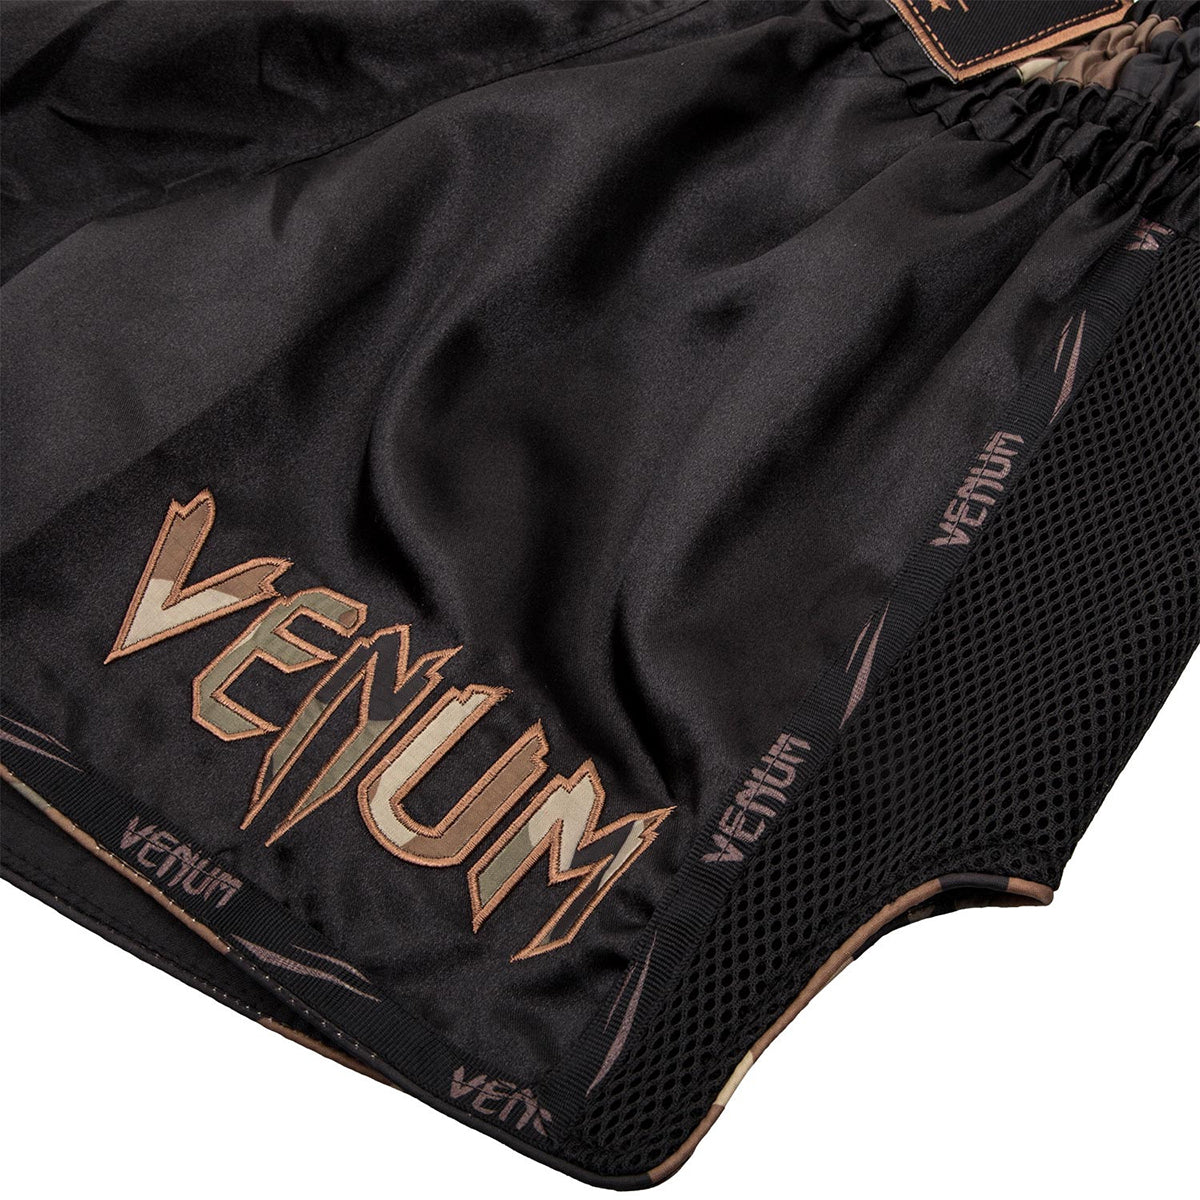 Venum Giant Lightweight Muay Thai Shorts - Black/Forest Camo Venum